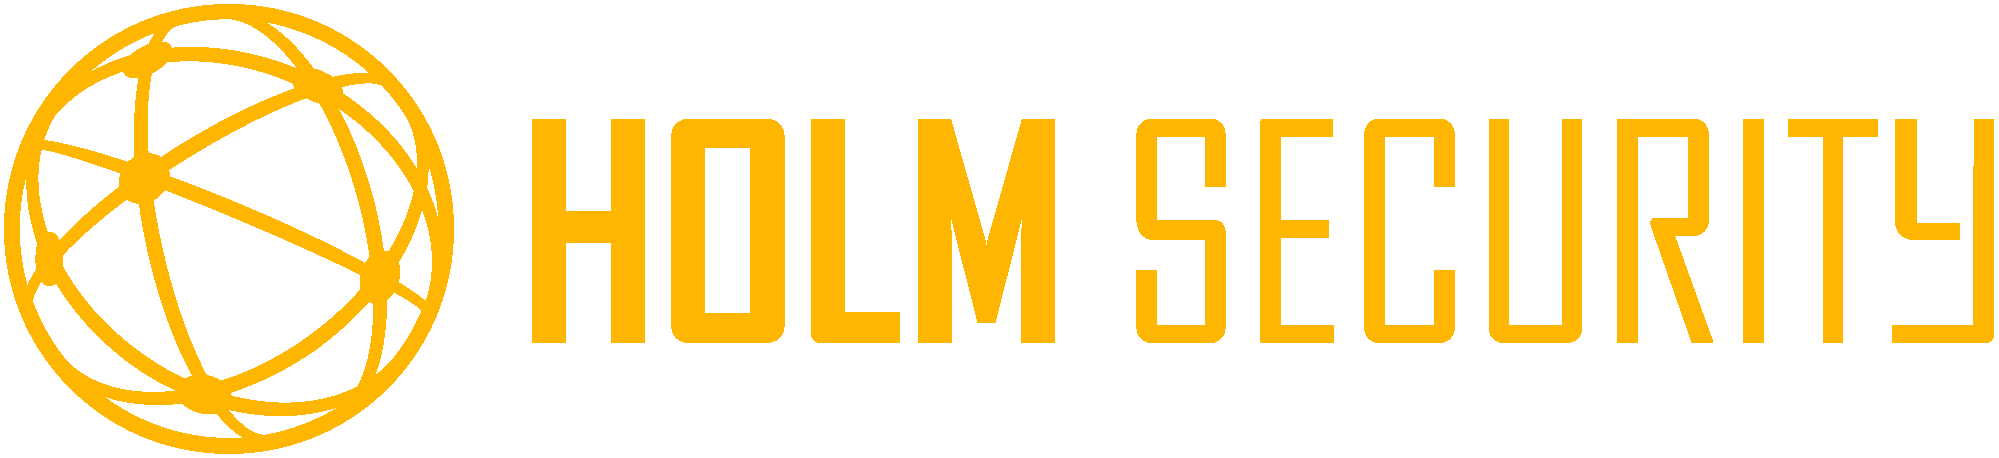 Holm Security logo